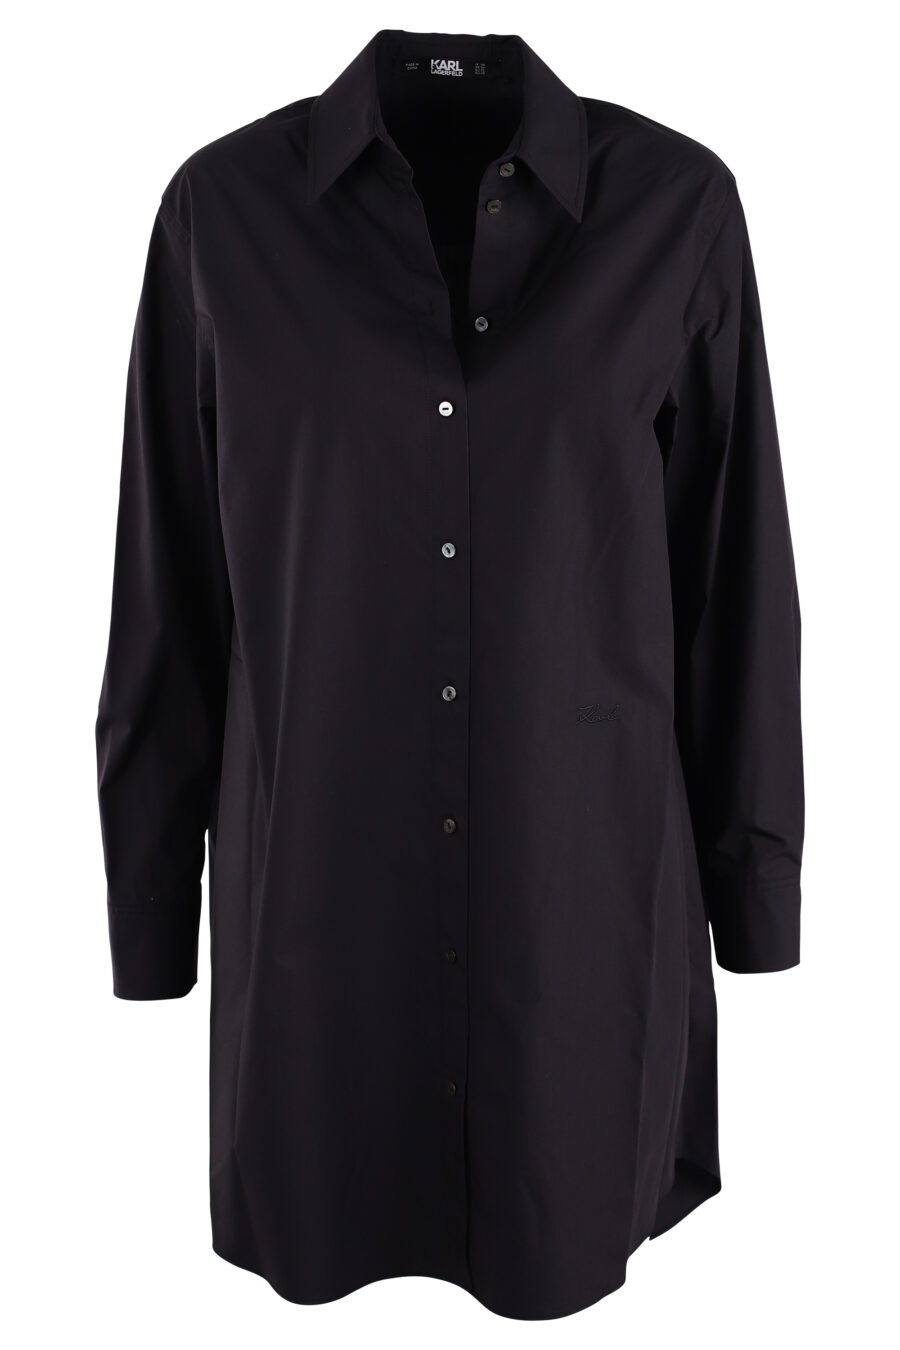 Longue chemise noire avec logo strass - IMG 3081